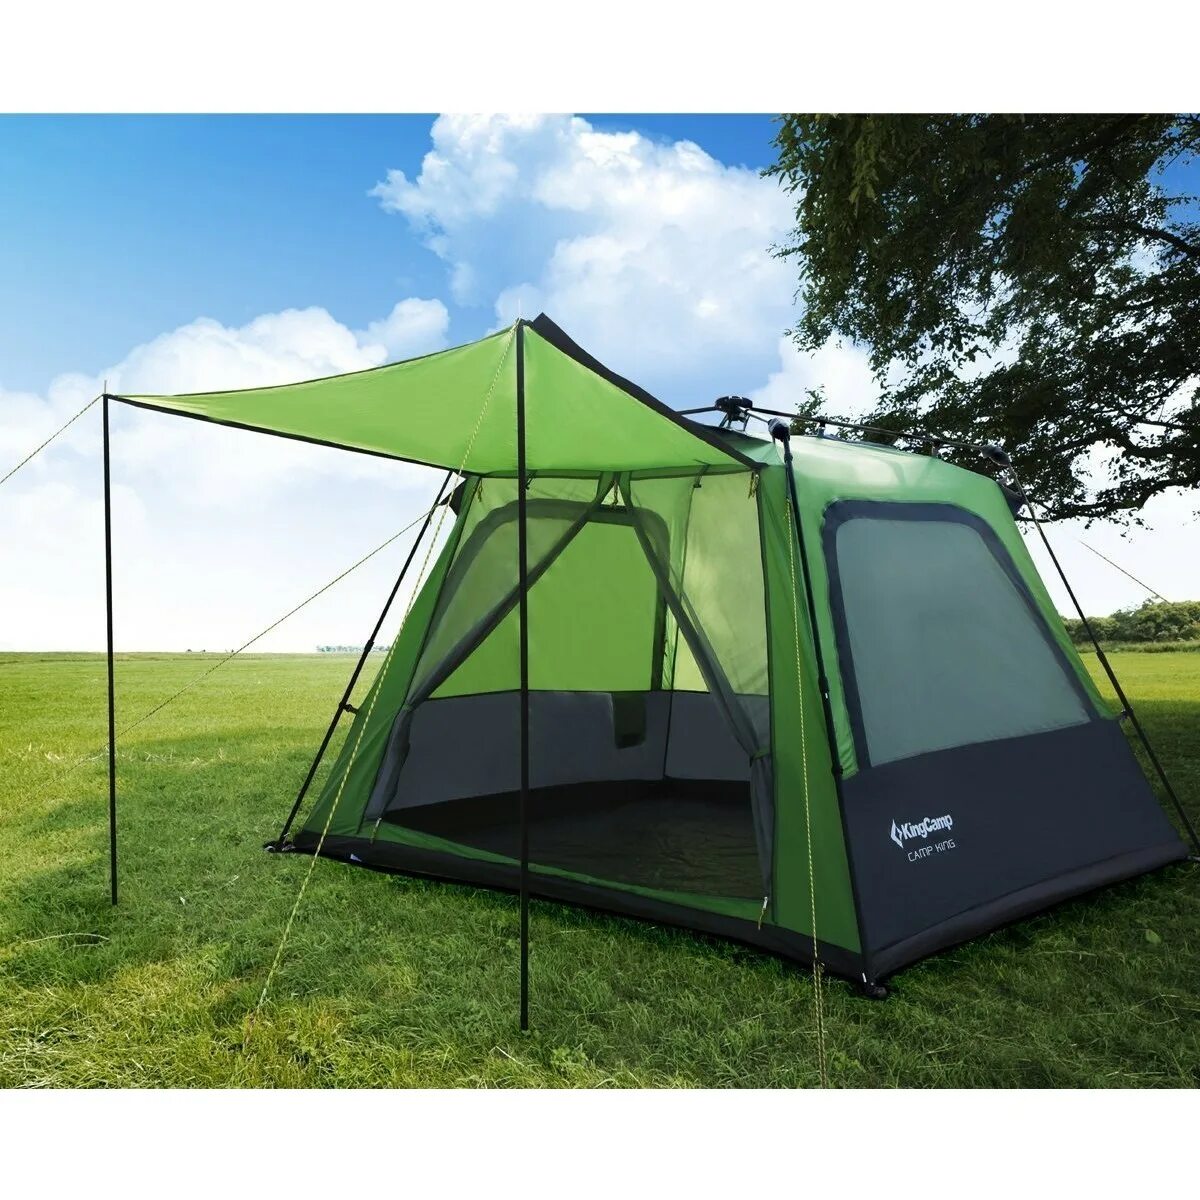 Купить палатку дешево. Палатка Кинг Камп 2. Палатка Кинг Камп 2 Hiker. Easy Camp палатка 3х местная. Палатка шатер Camp т105.